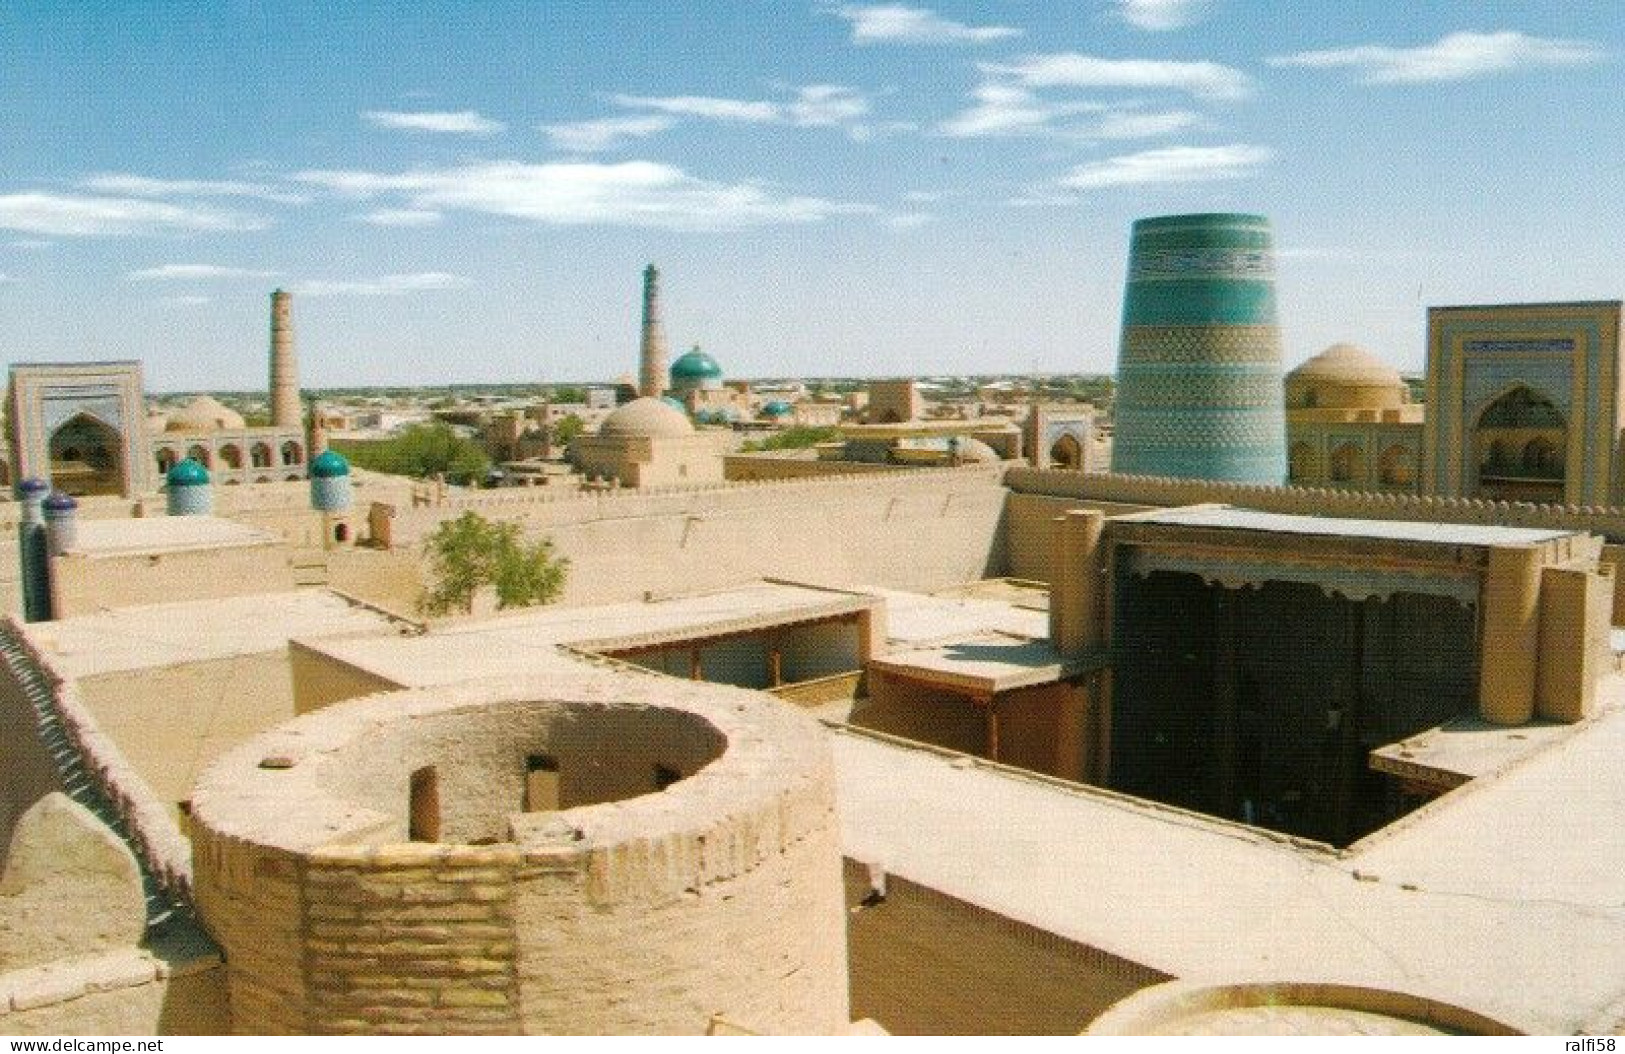 1 AK Usbekistan * Historische Altstadt Von Chiwa (Xiva) Mit Der Turm Kalta Minor (rechts) - 1990 UNESCO Weltkulturerbe * - Ouzbékistan